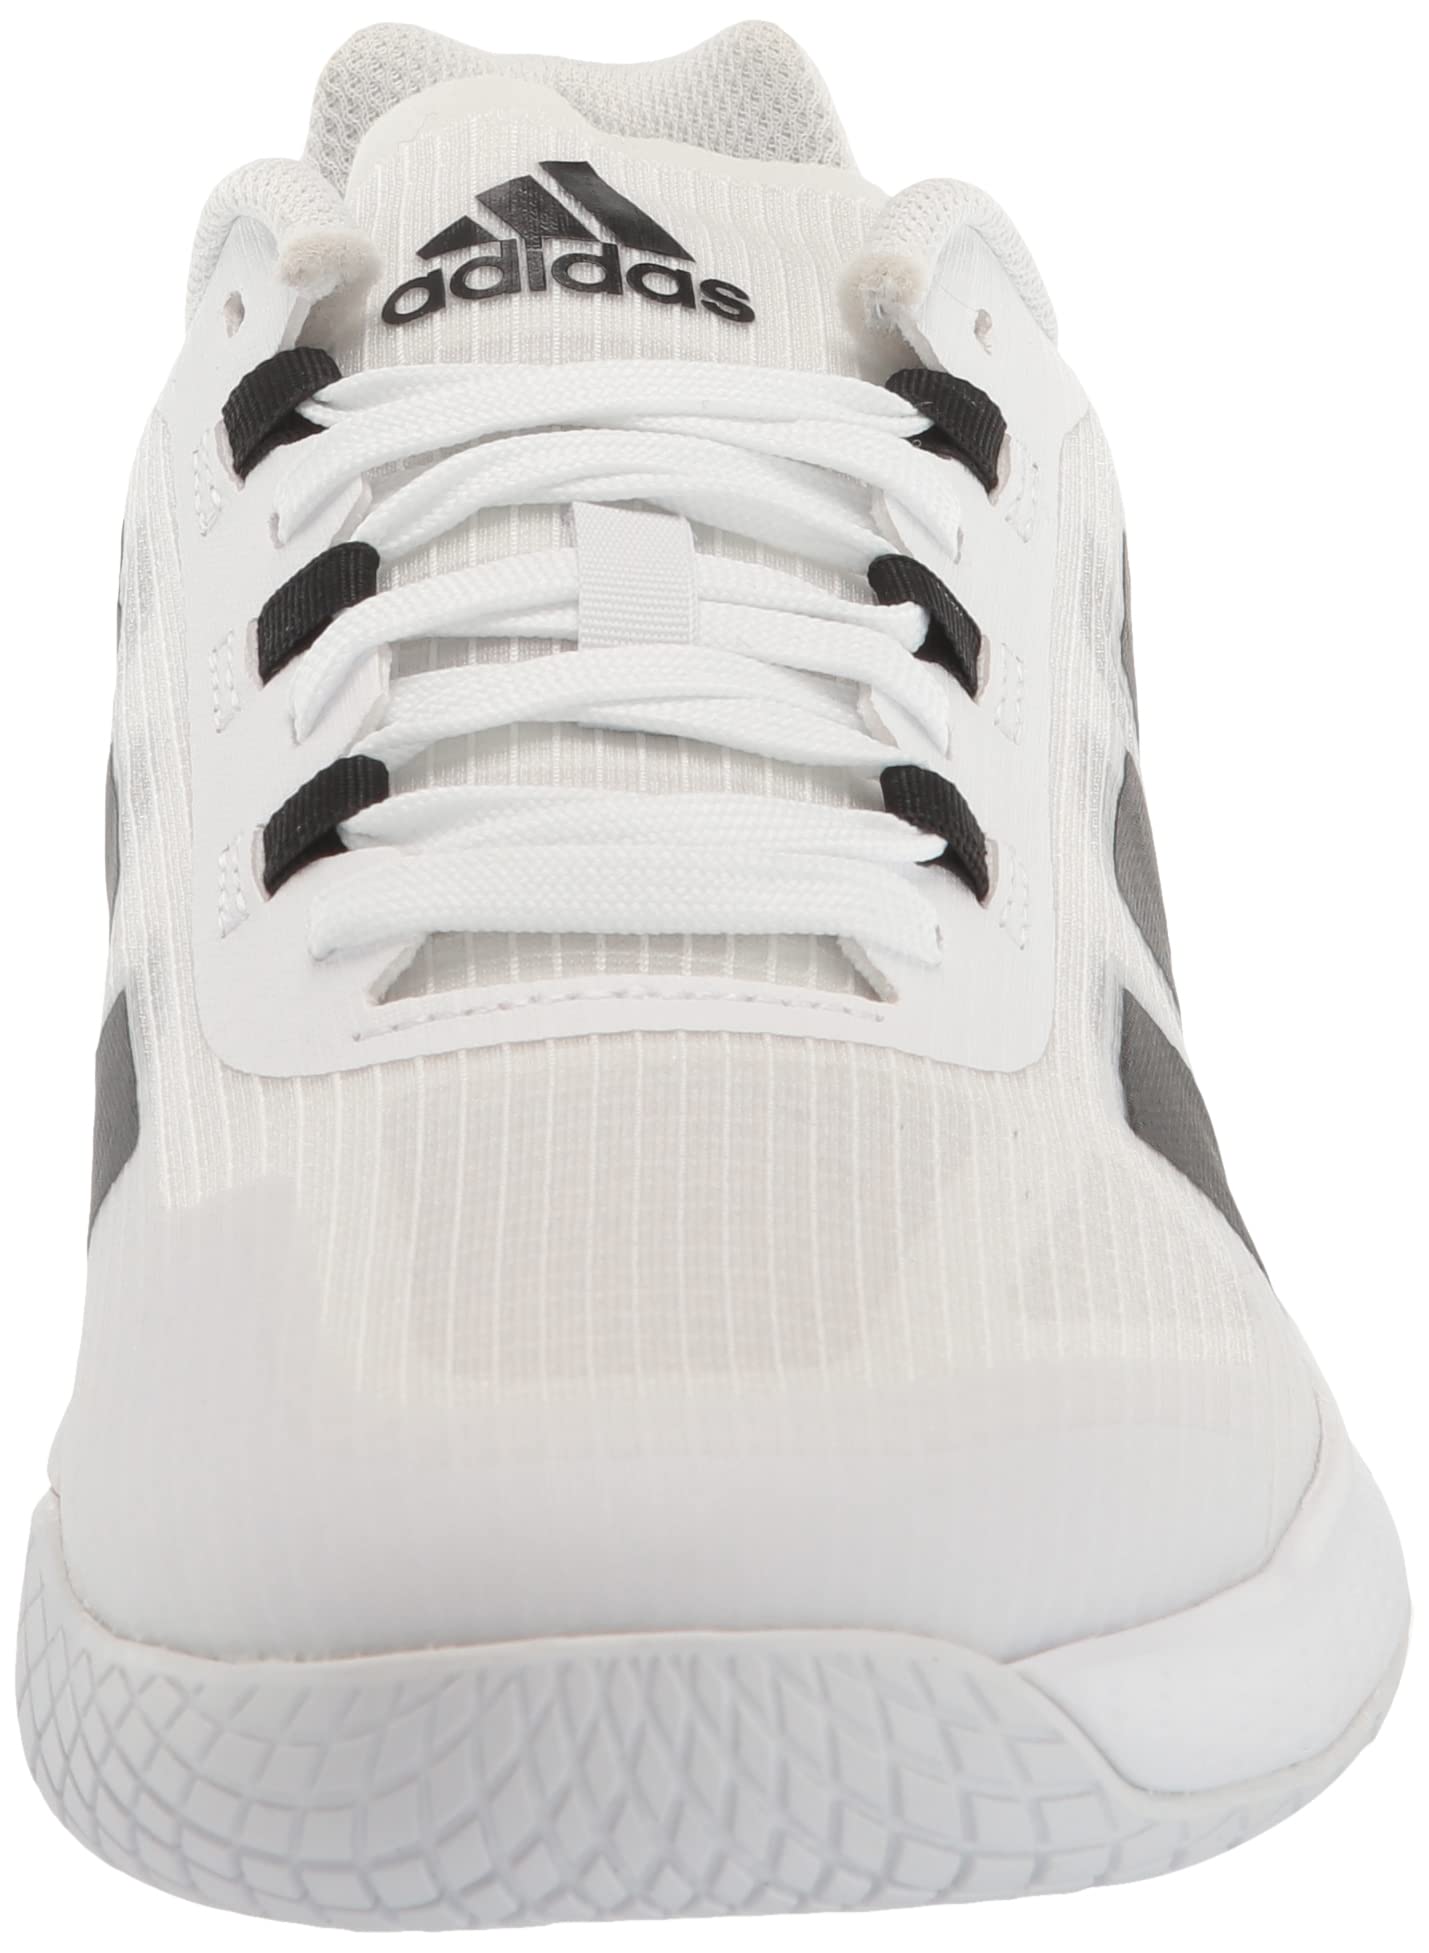 adidas Men's Forcebounce 2.0 Running Shoe